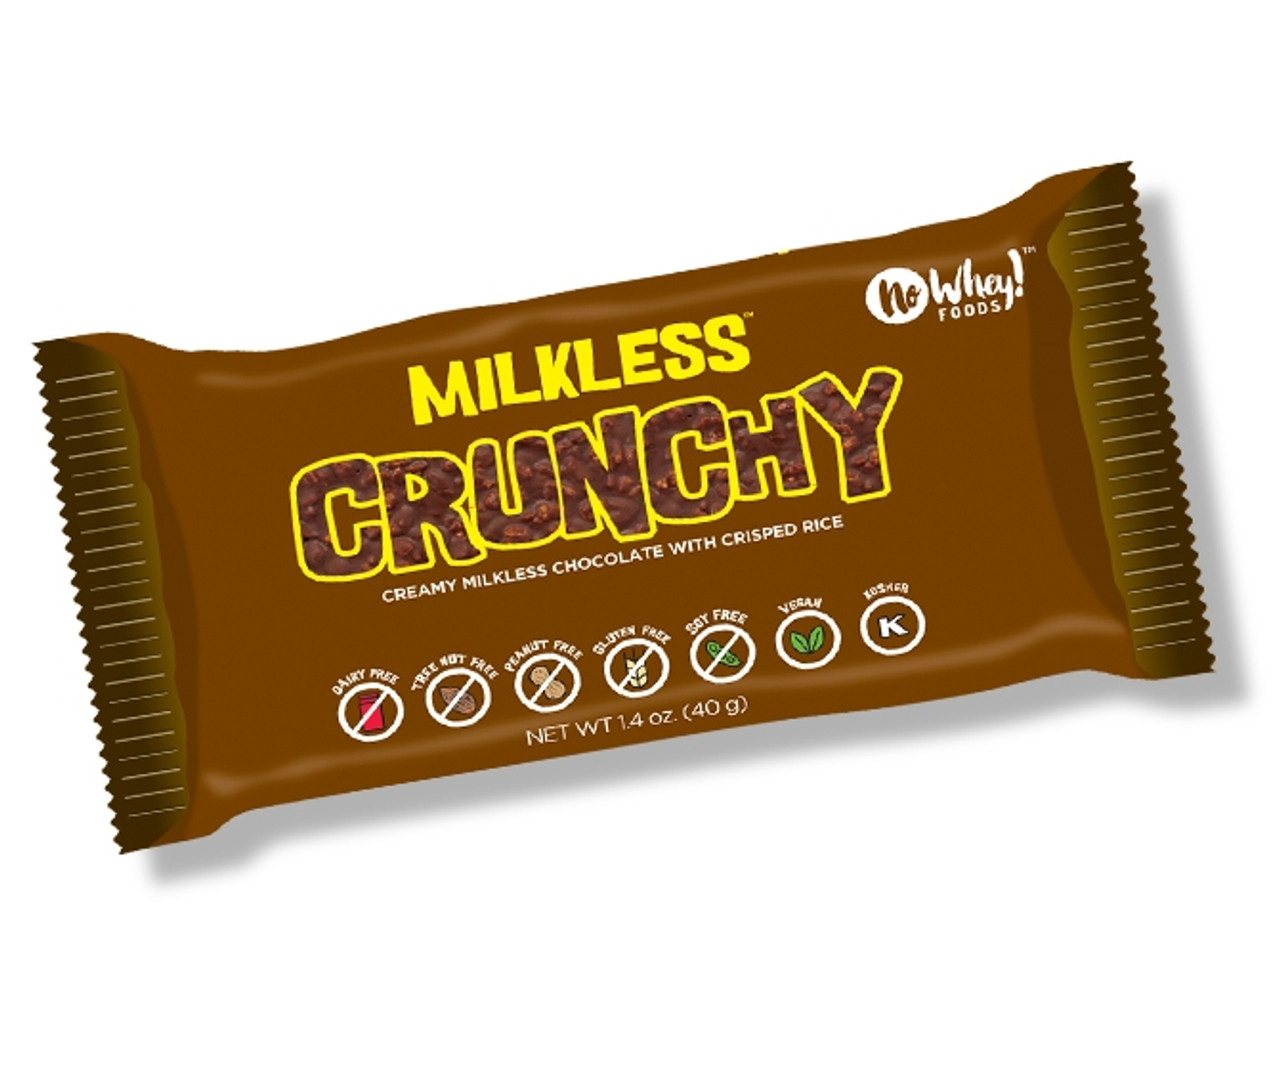 No Whey Milkless Crunchy